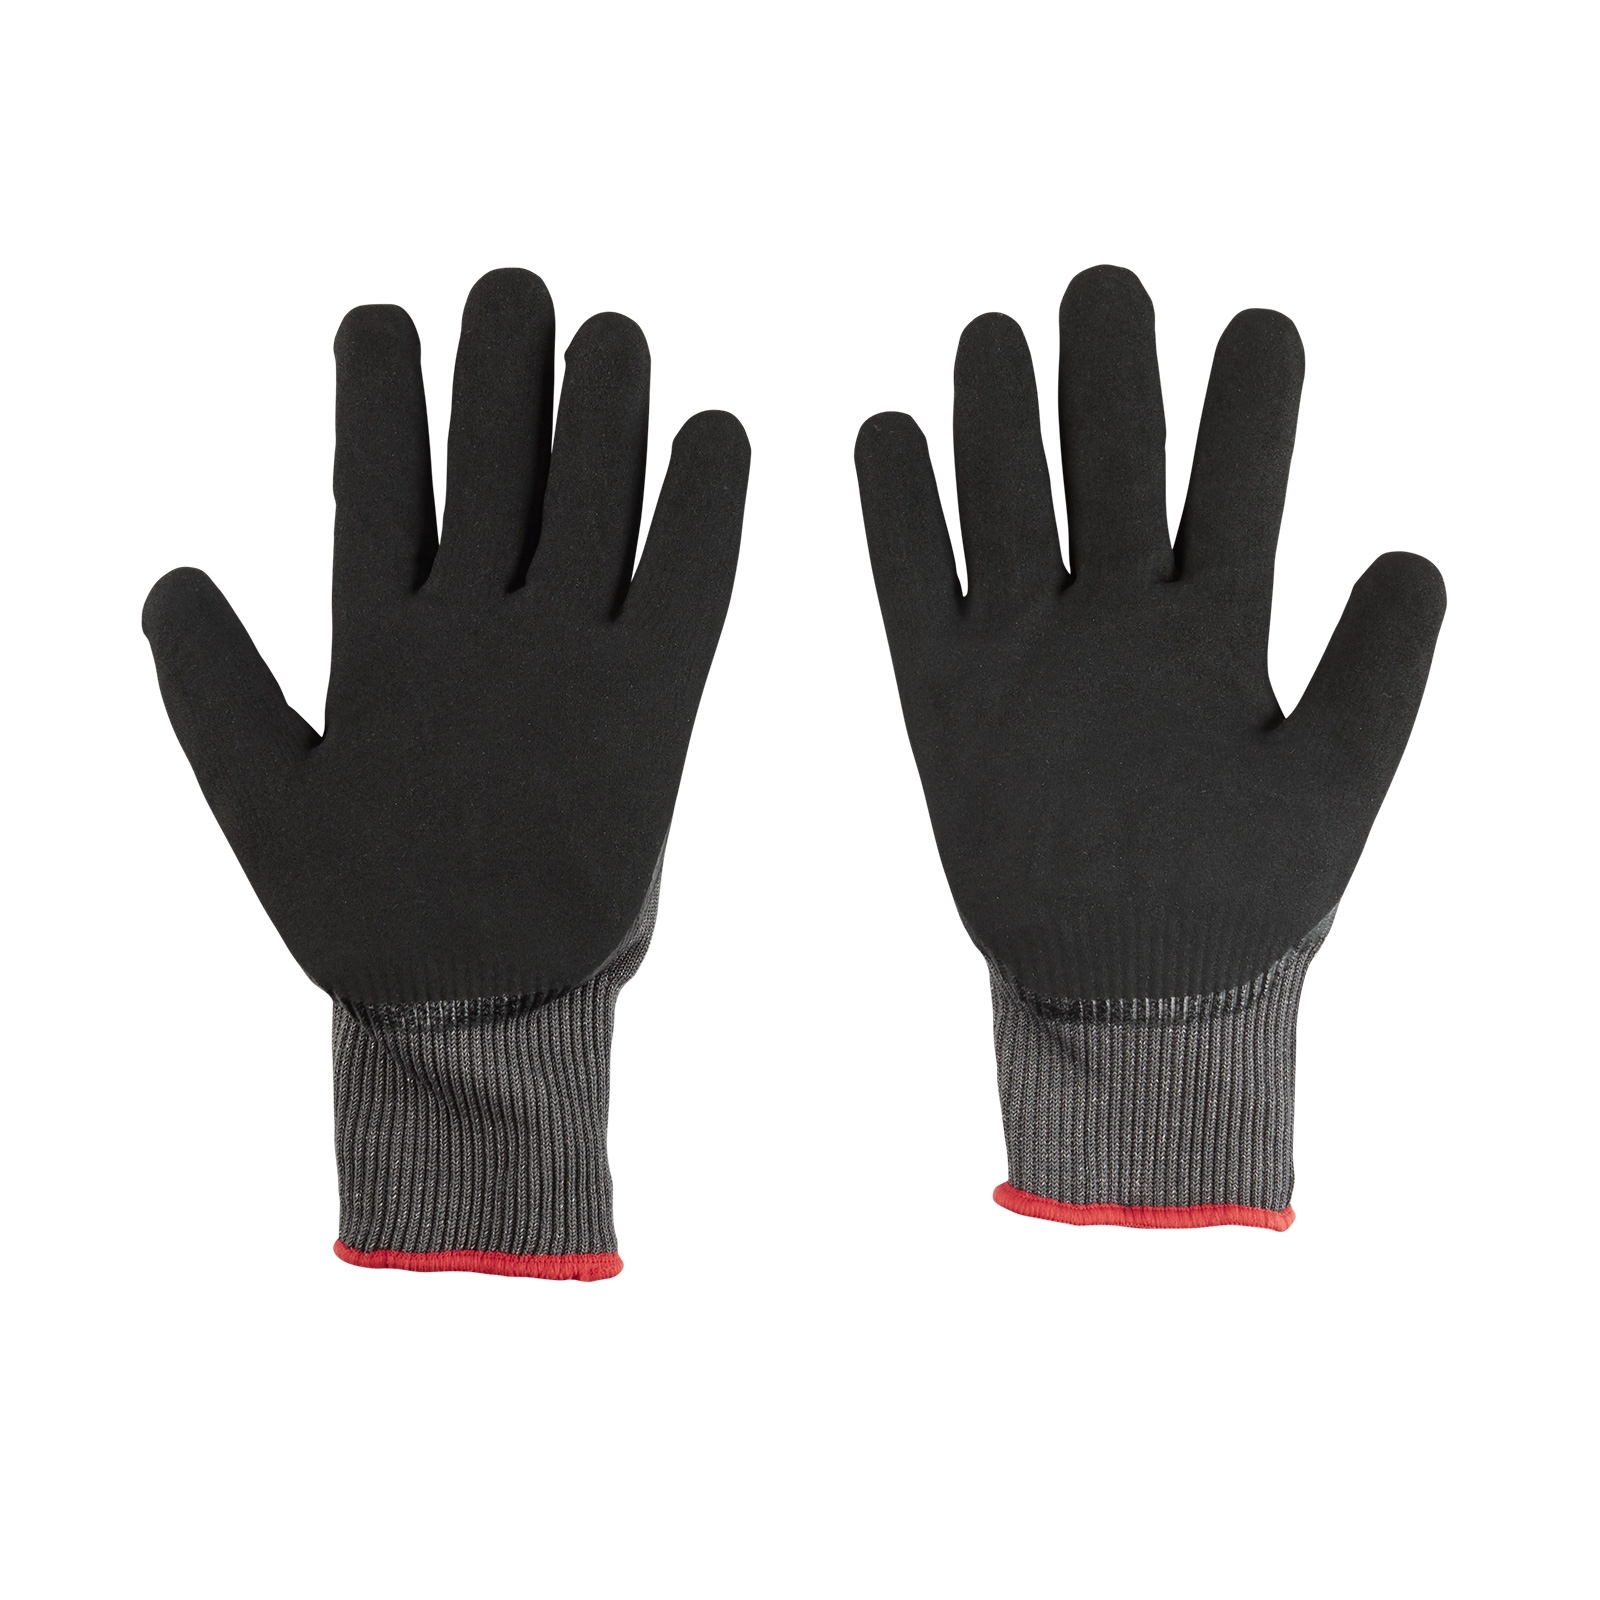 Milwaukee Cut Level 5 Gloves - Medium 48228951